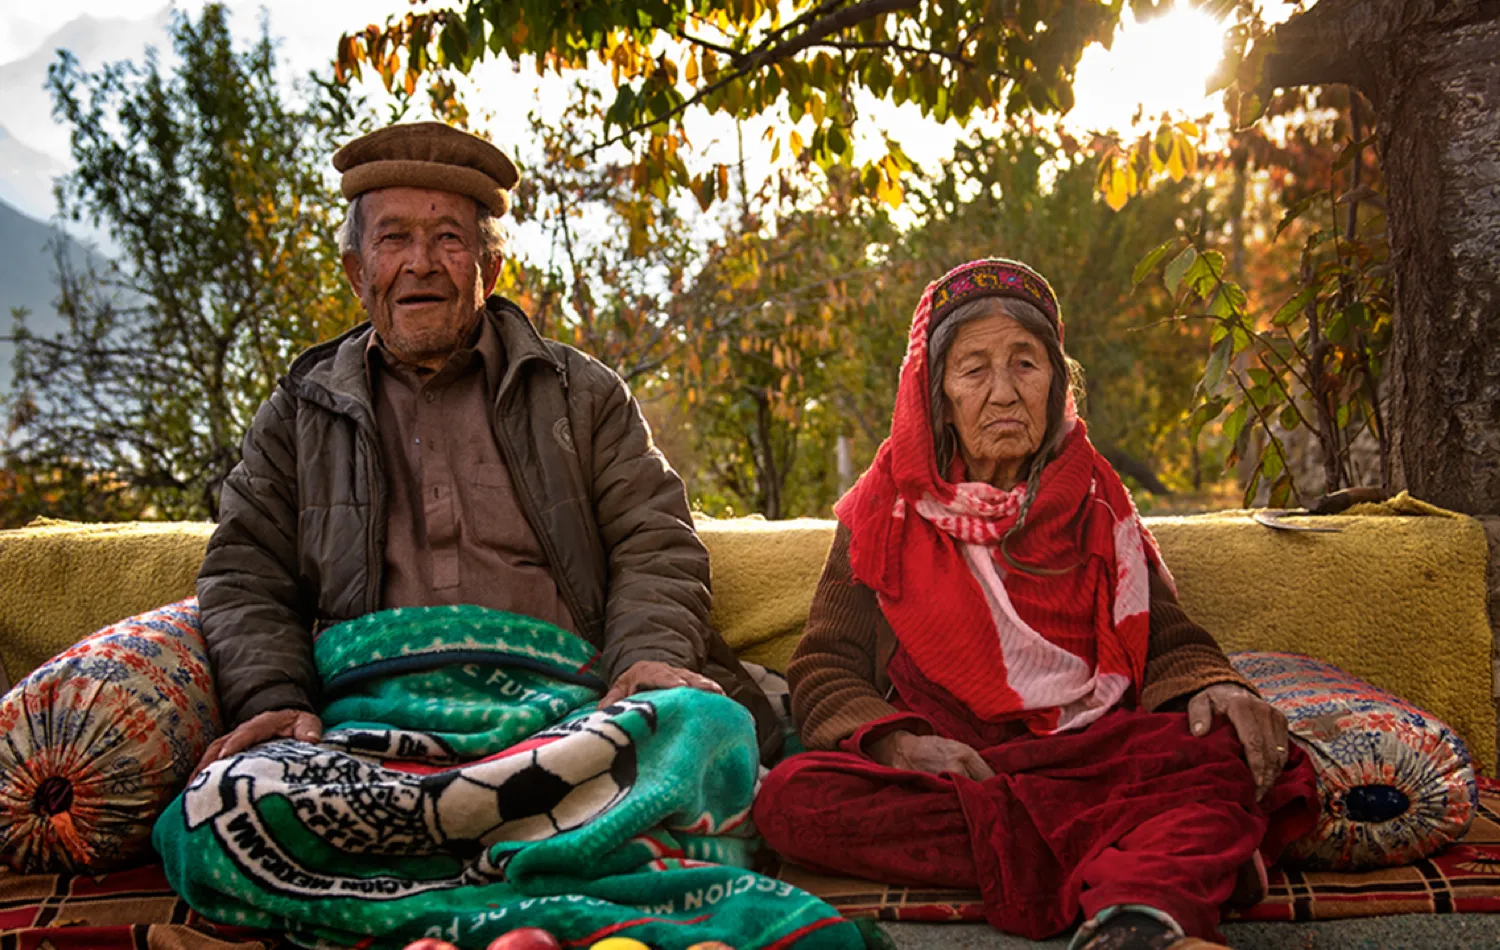 Kunza oldest people, beautiful hunza valley women